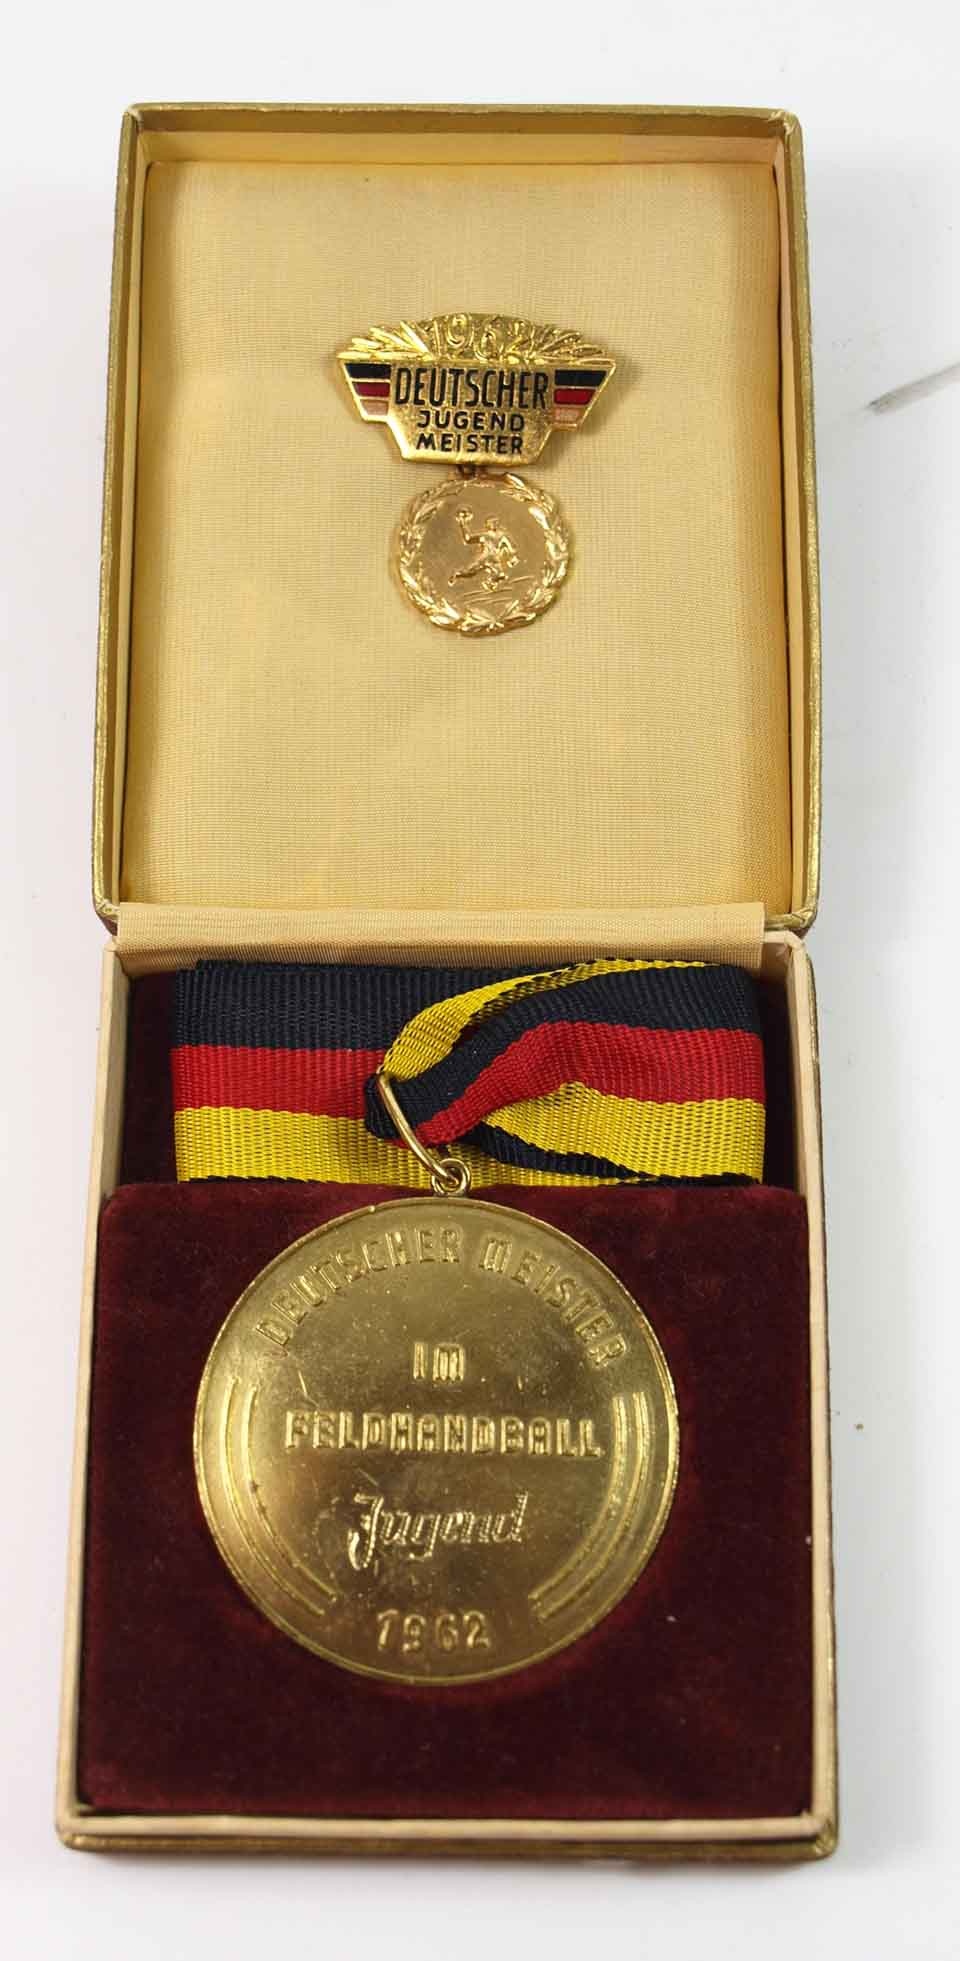 Medaille Deutscher Jugendmeister im Fledhandball der Frauen 1962 (Museum Weißenfels - Schloss Neu-Augustusburg CC BY-NC-SA)